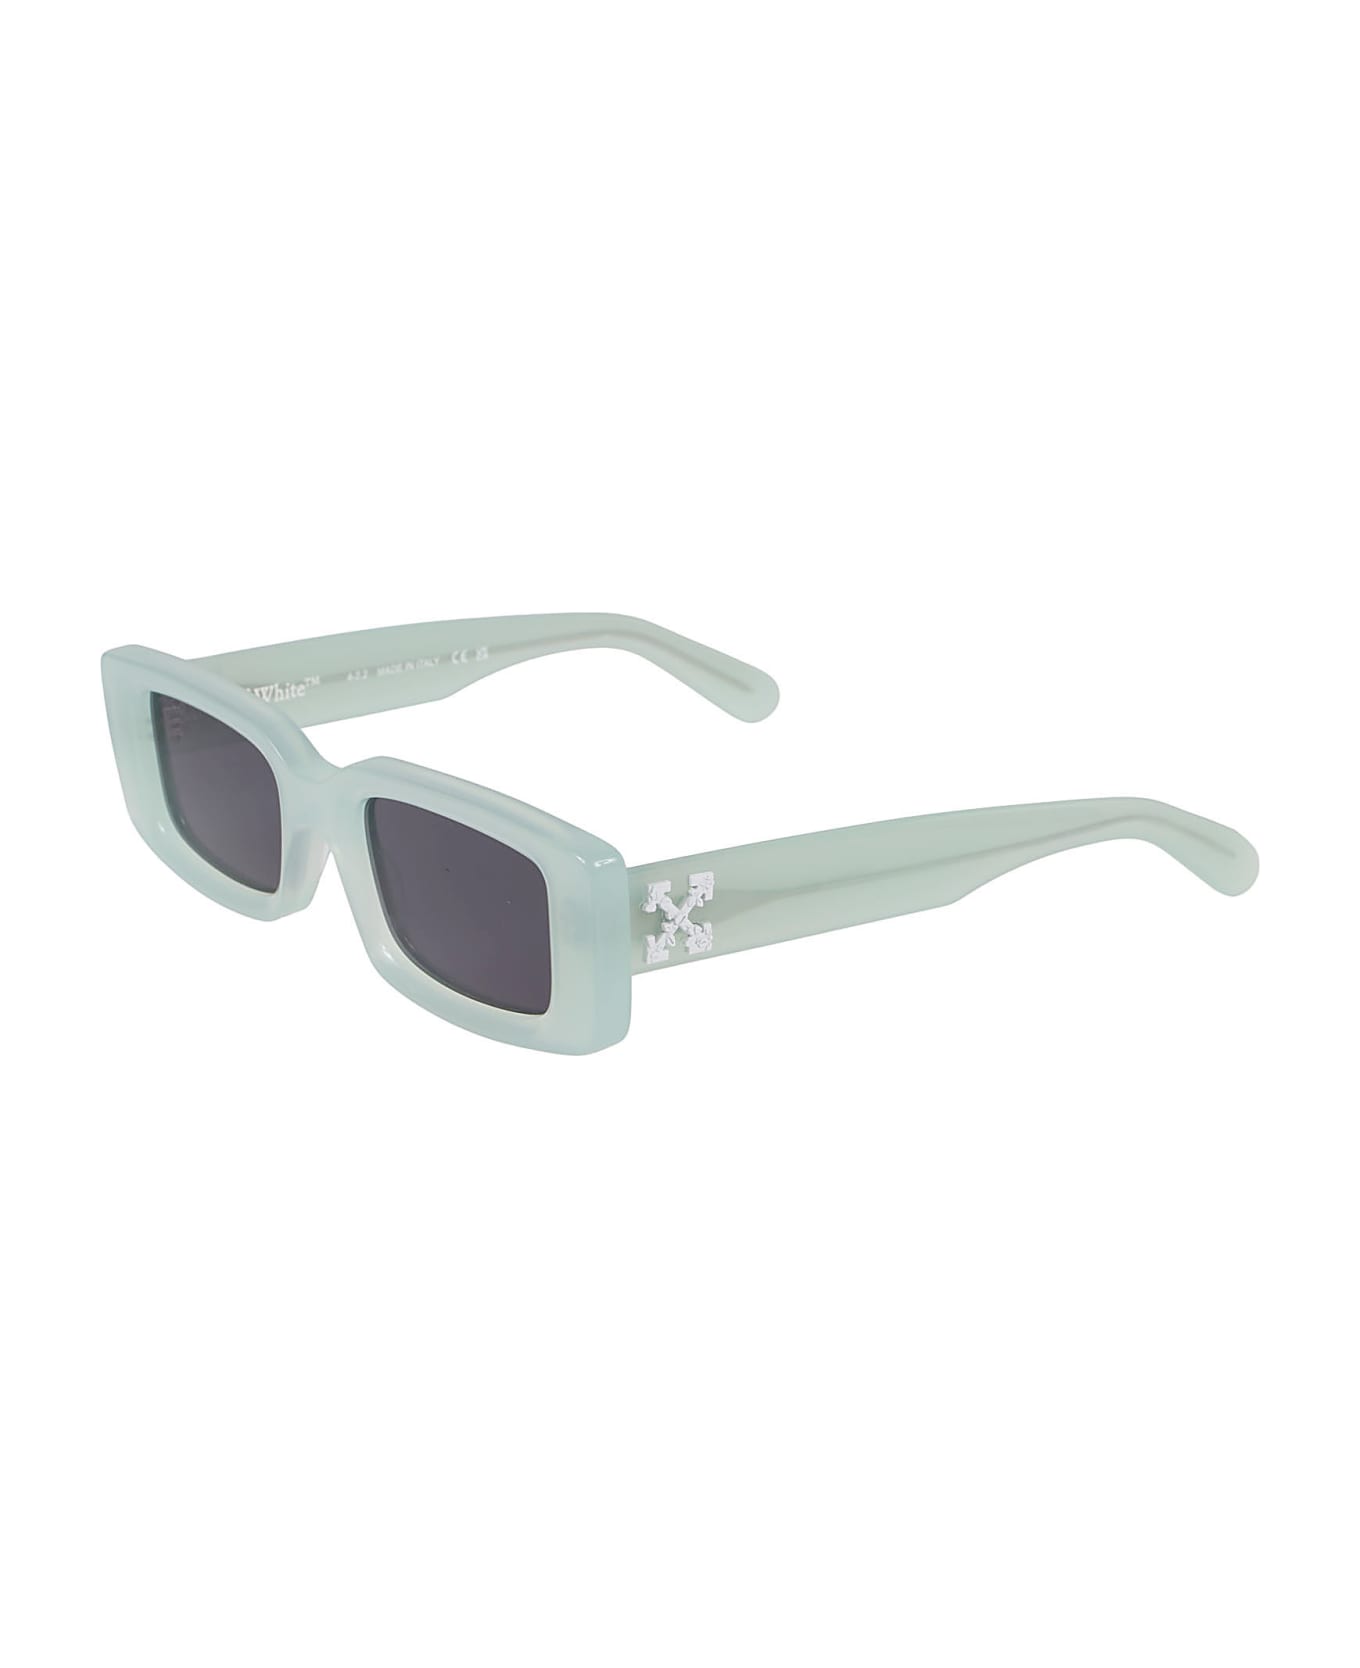 Off-White Arthur Sunglasses - Teal Dark Grey サングラス